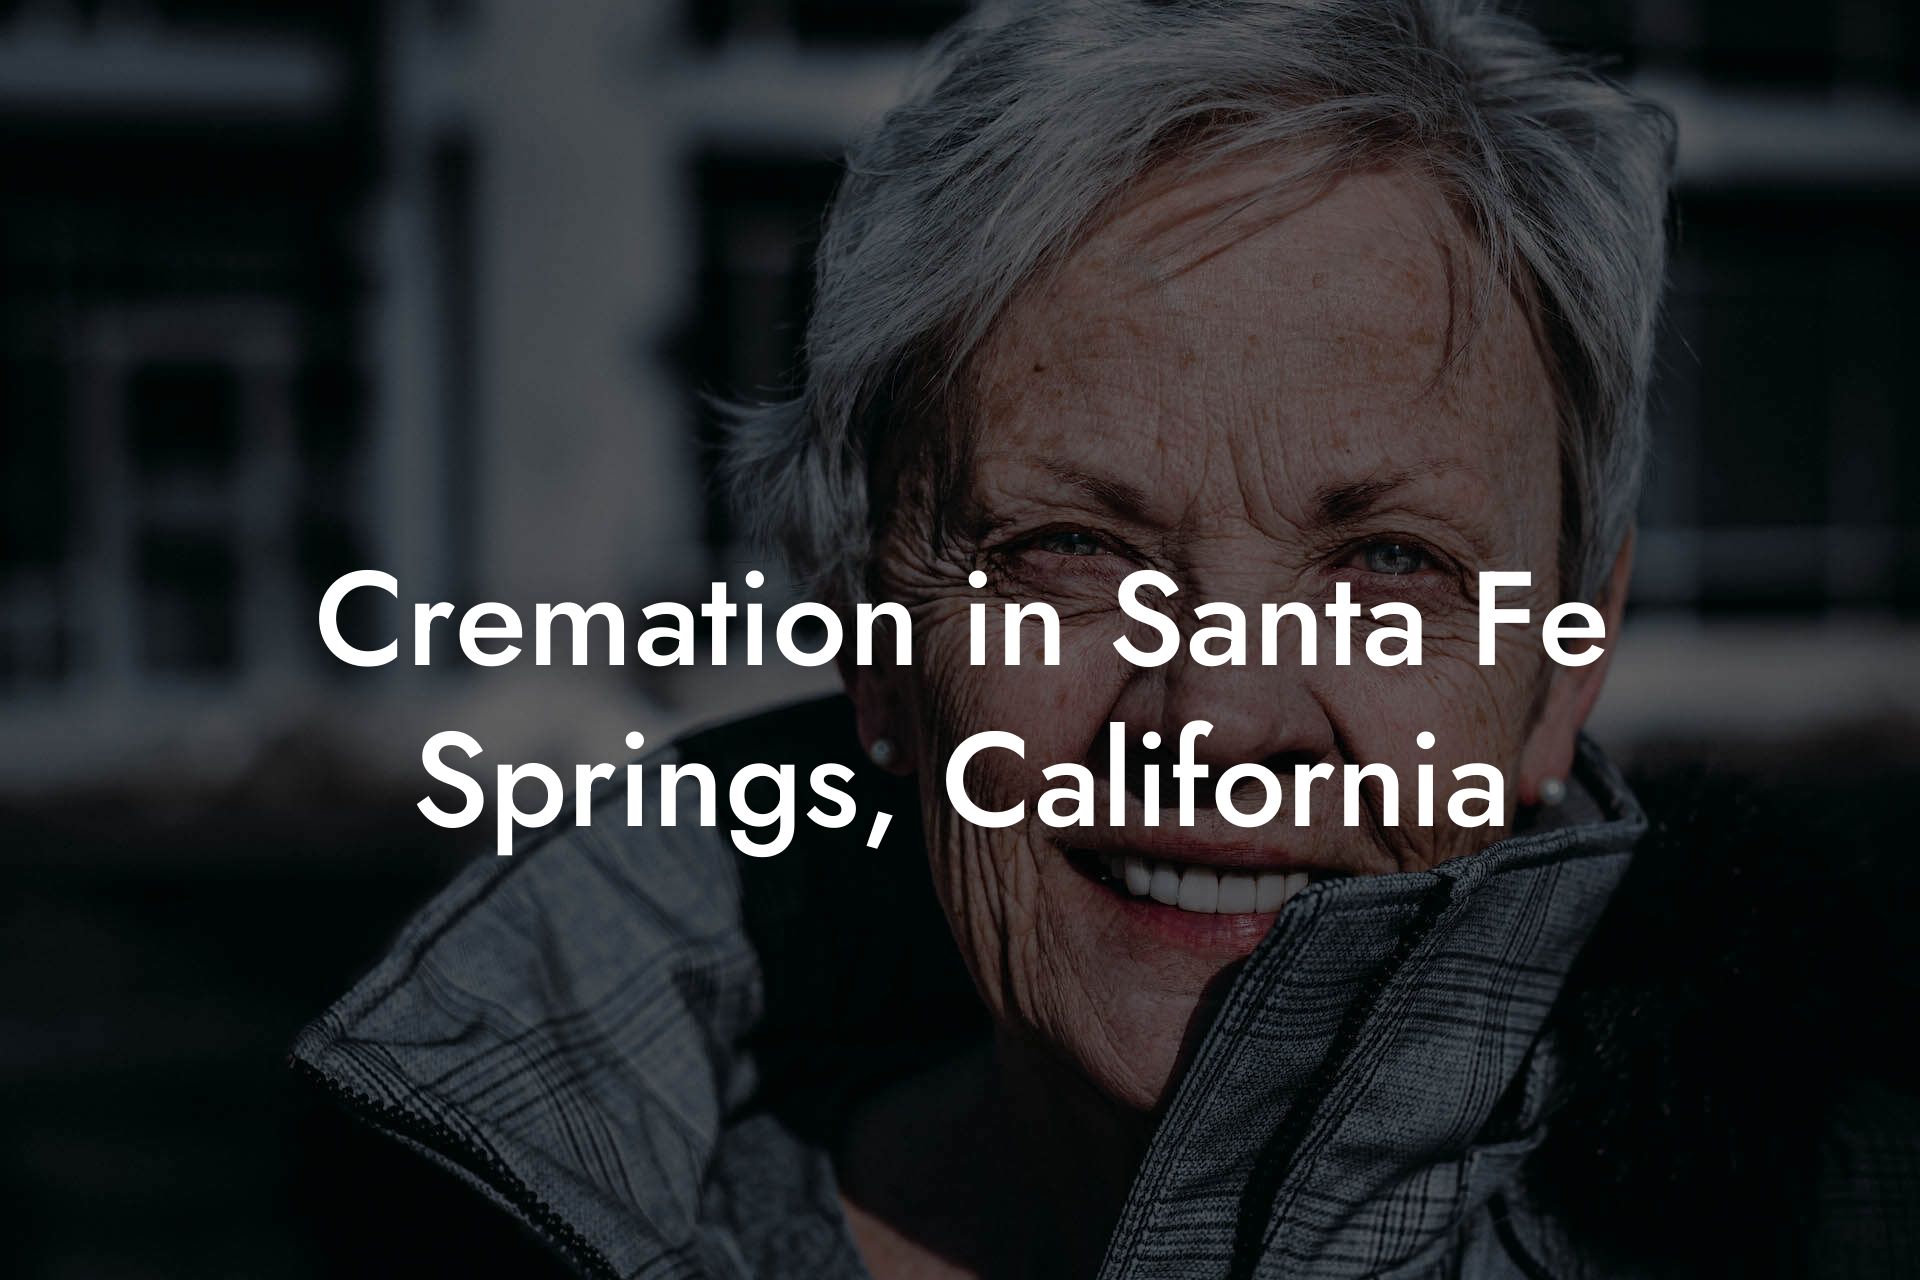 Cremation in Santa Fe Springs, California